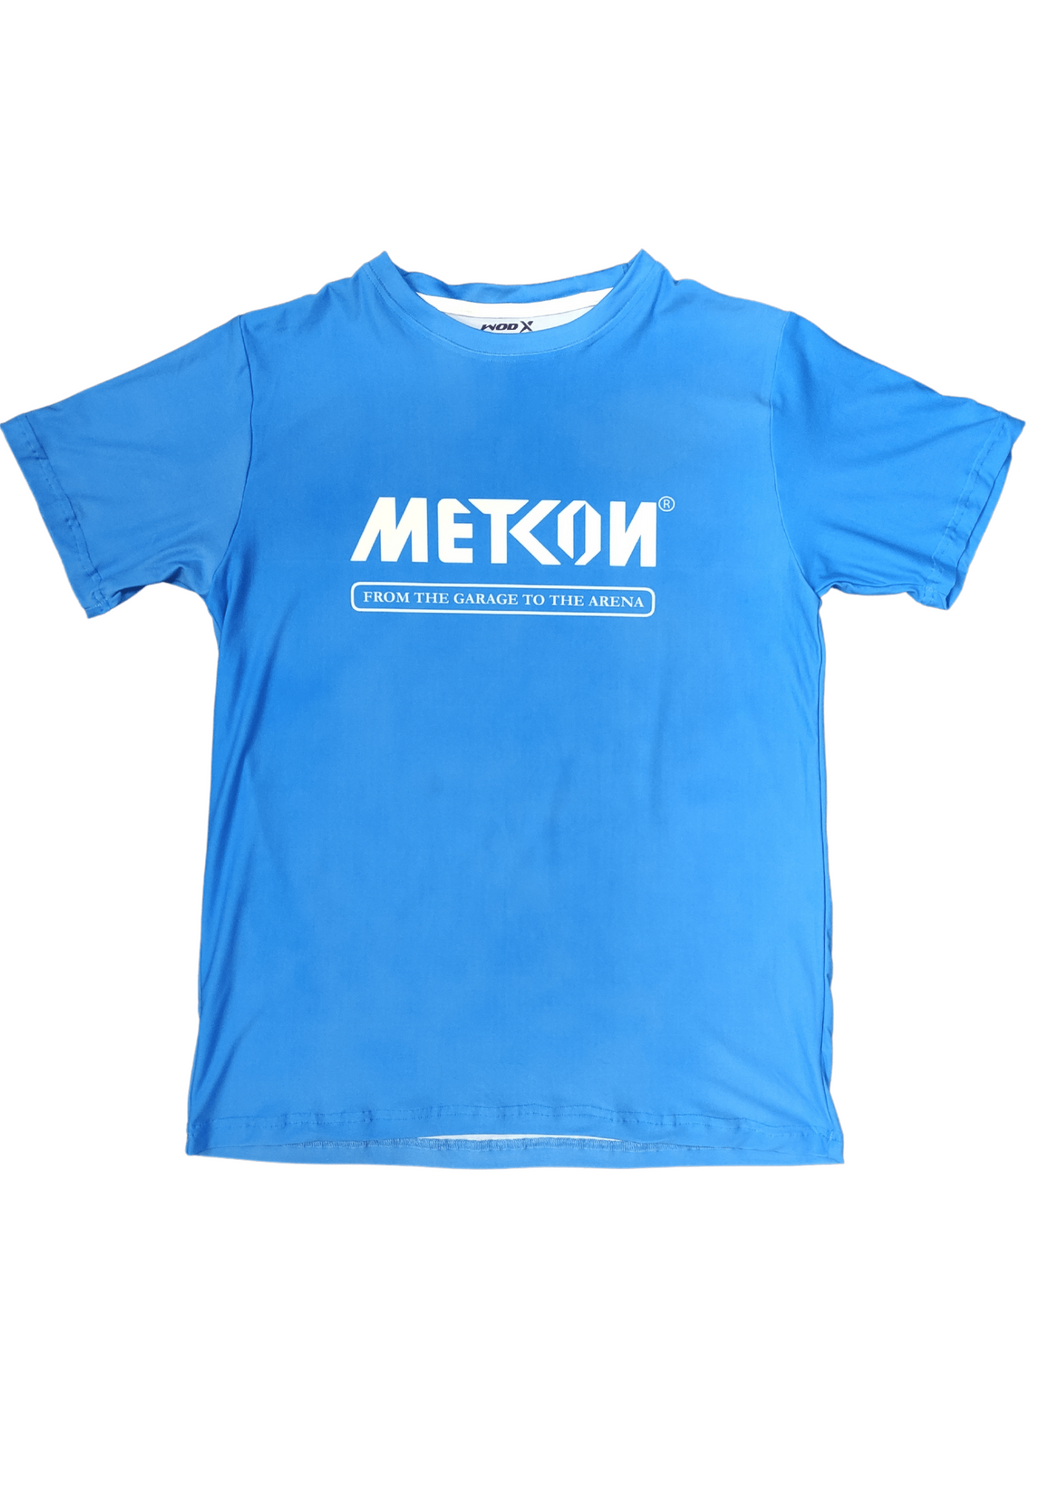 METCON x WODX T-Shirt